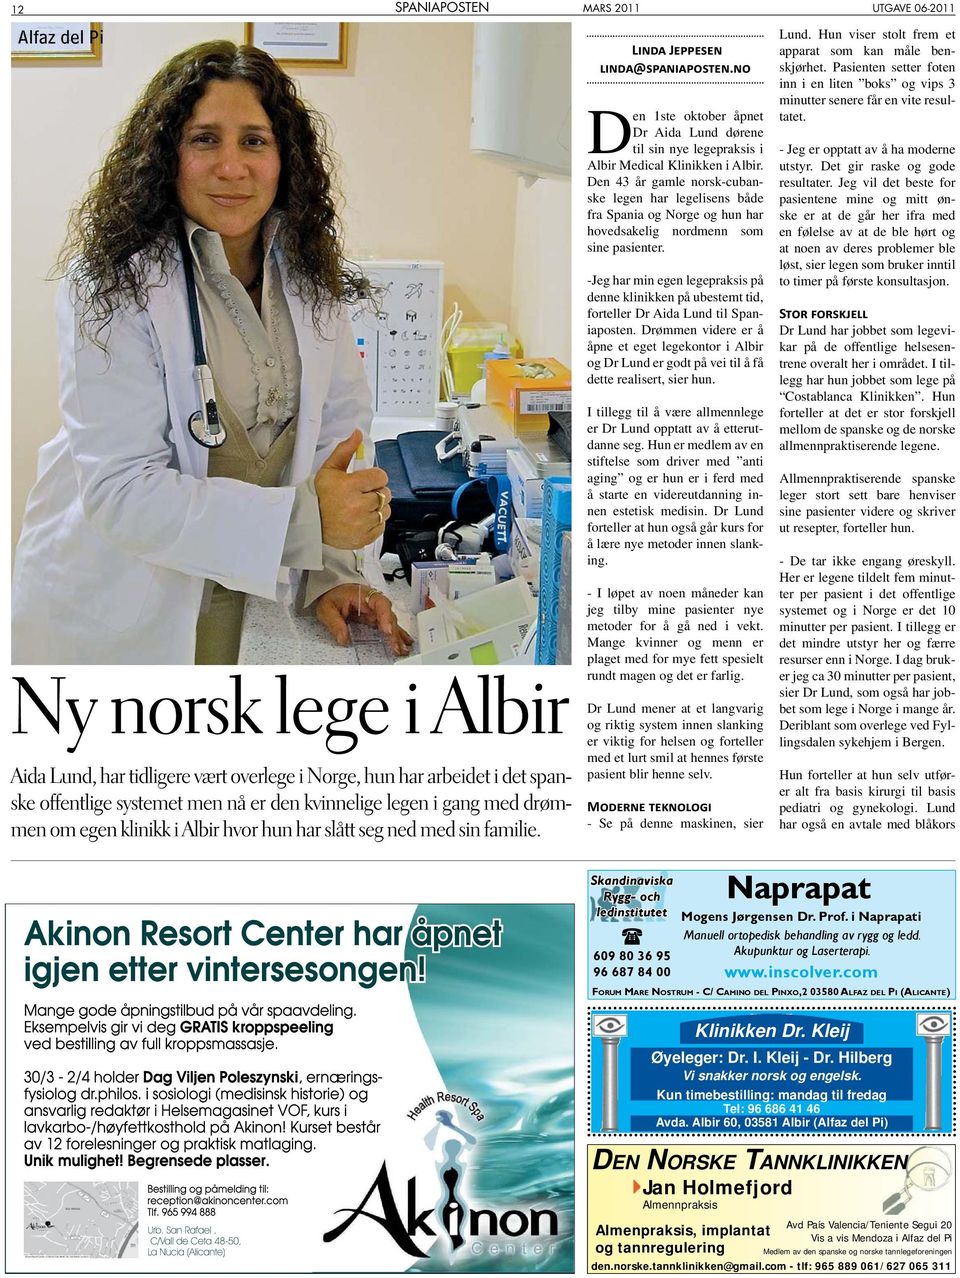 Den 1ste oktober åpnet Dr Aida Lund dørene til sin nye legepraksis i Albir Medical Klinikken i Albir.